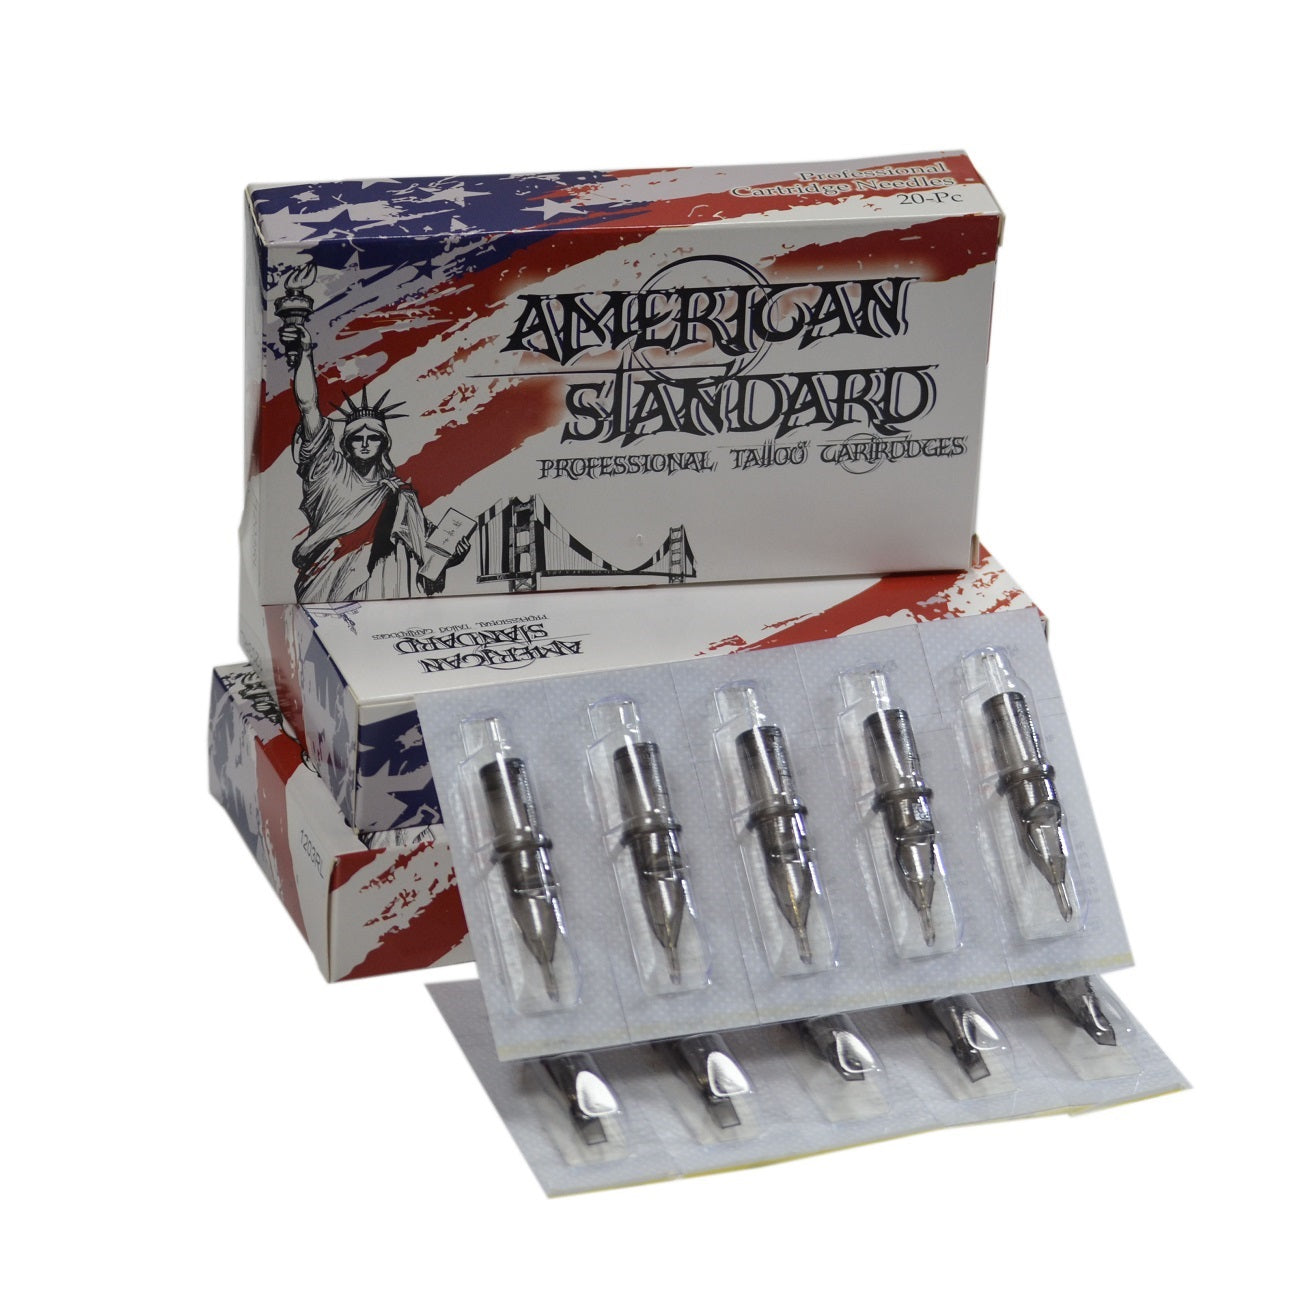  Magnum American Standard Tattoo  Needles 